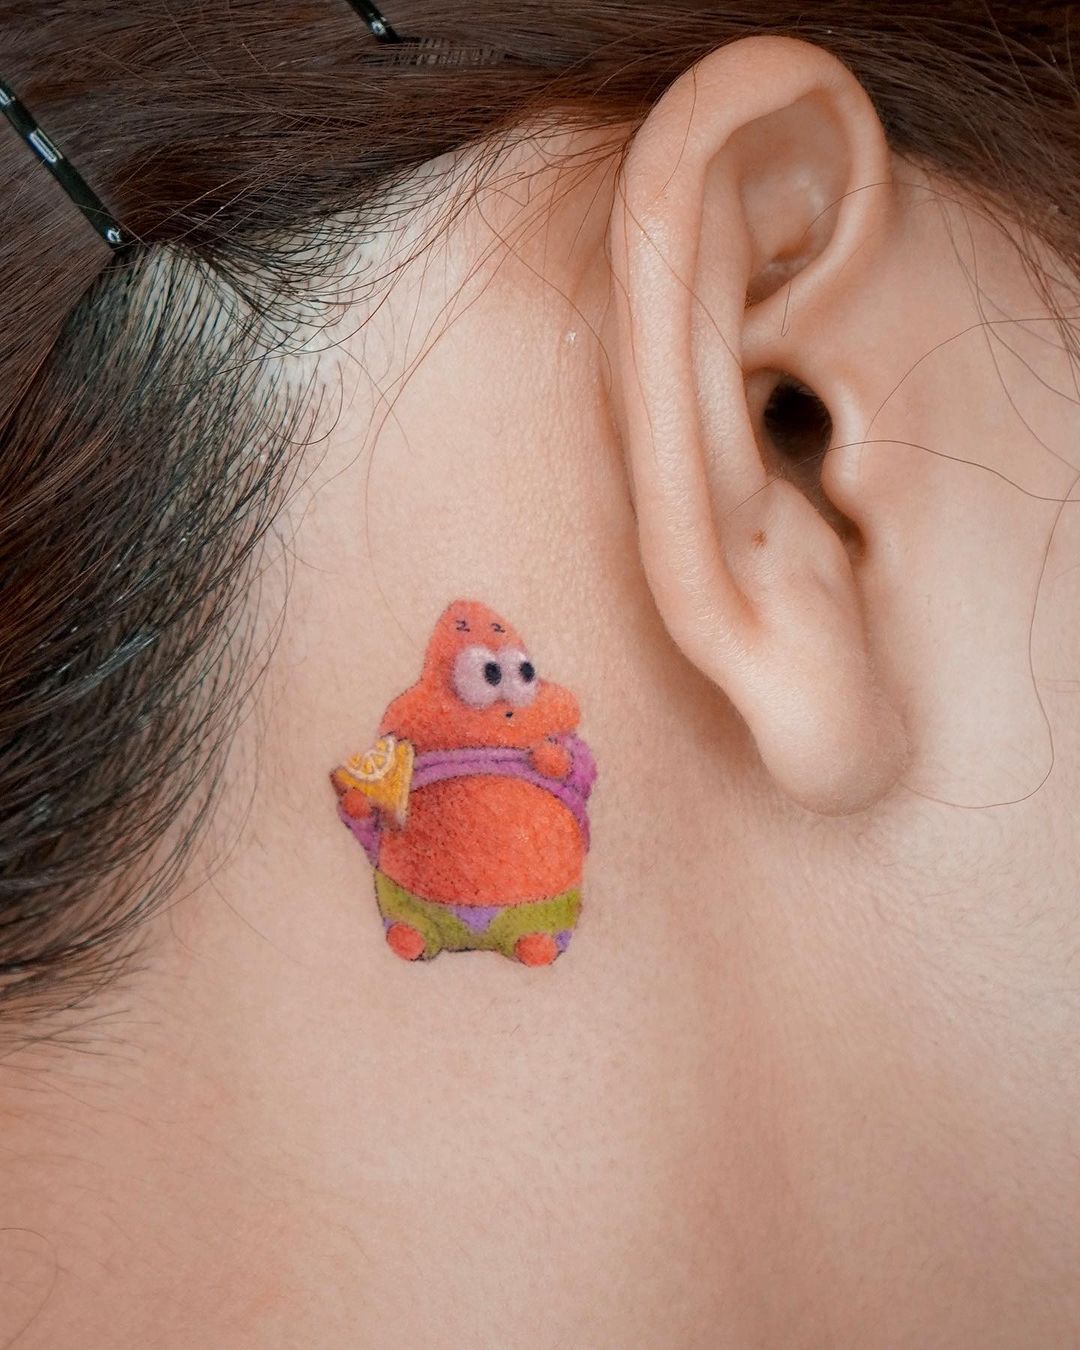 Patrik Tattoo Behind The Ear